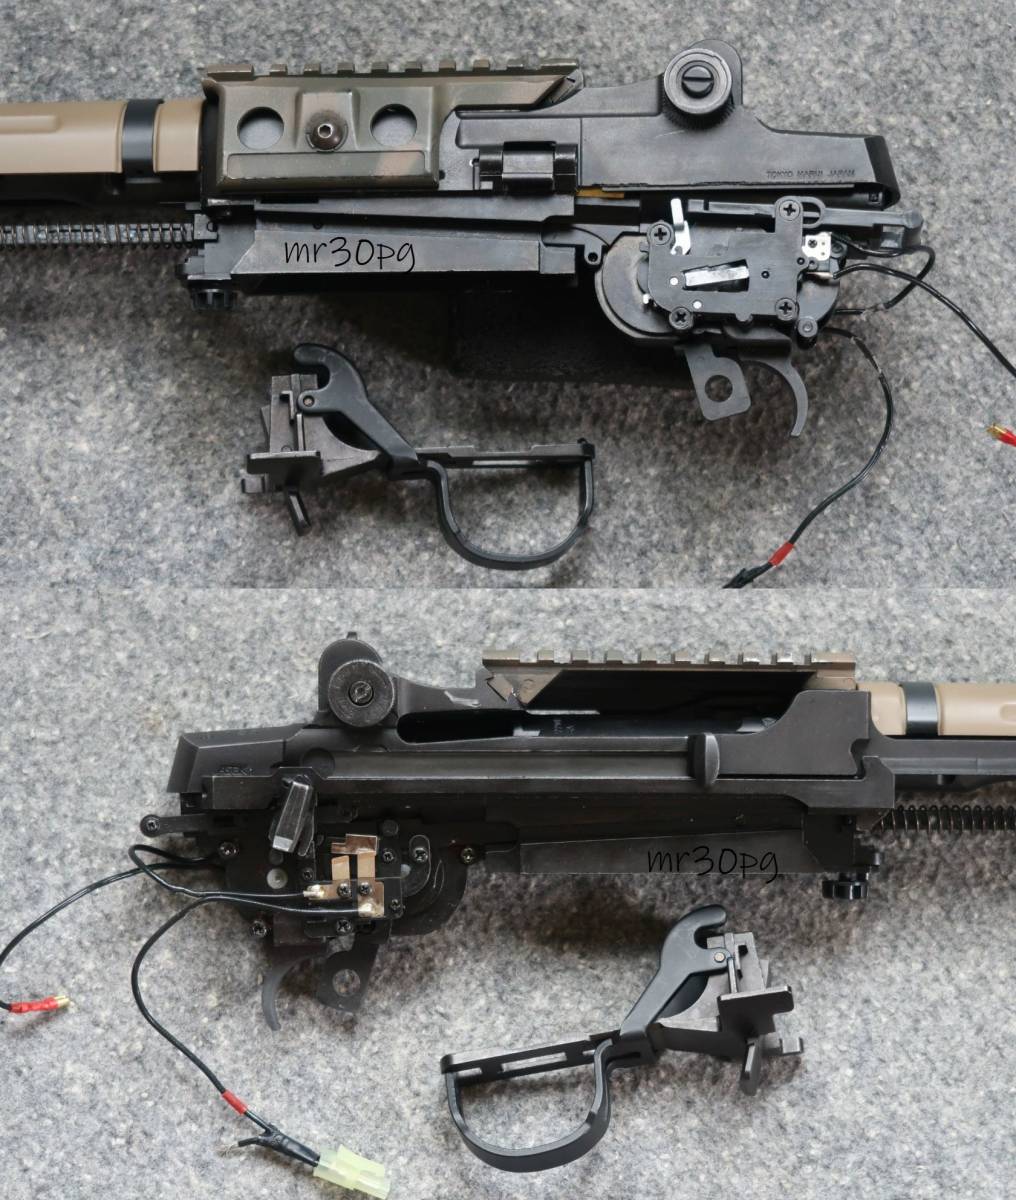 G&Pカスタム！※モーターなし不動品 東京マルイ製 M14ベース 7.62mmライフル DMR SANDストック組込み フルメタル電動ガン セミオート狙撃銃の画像6